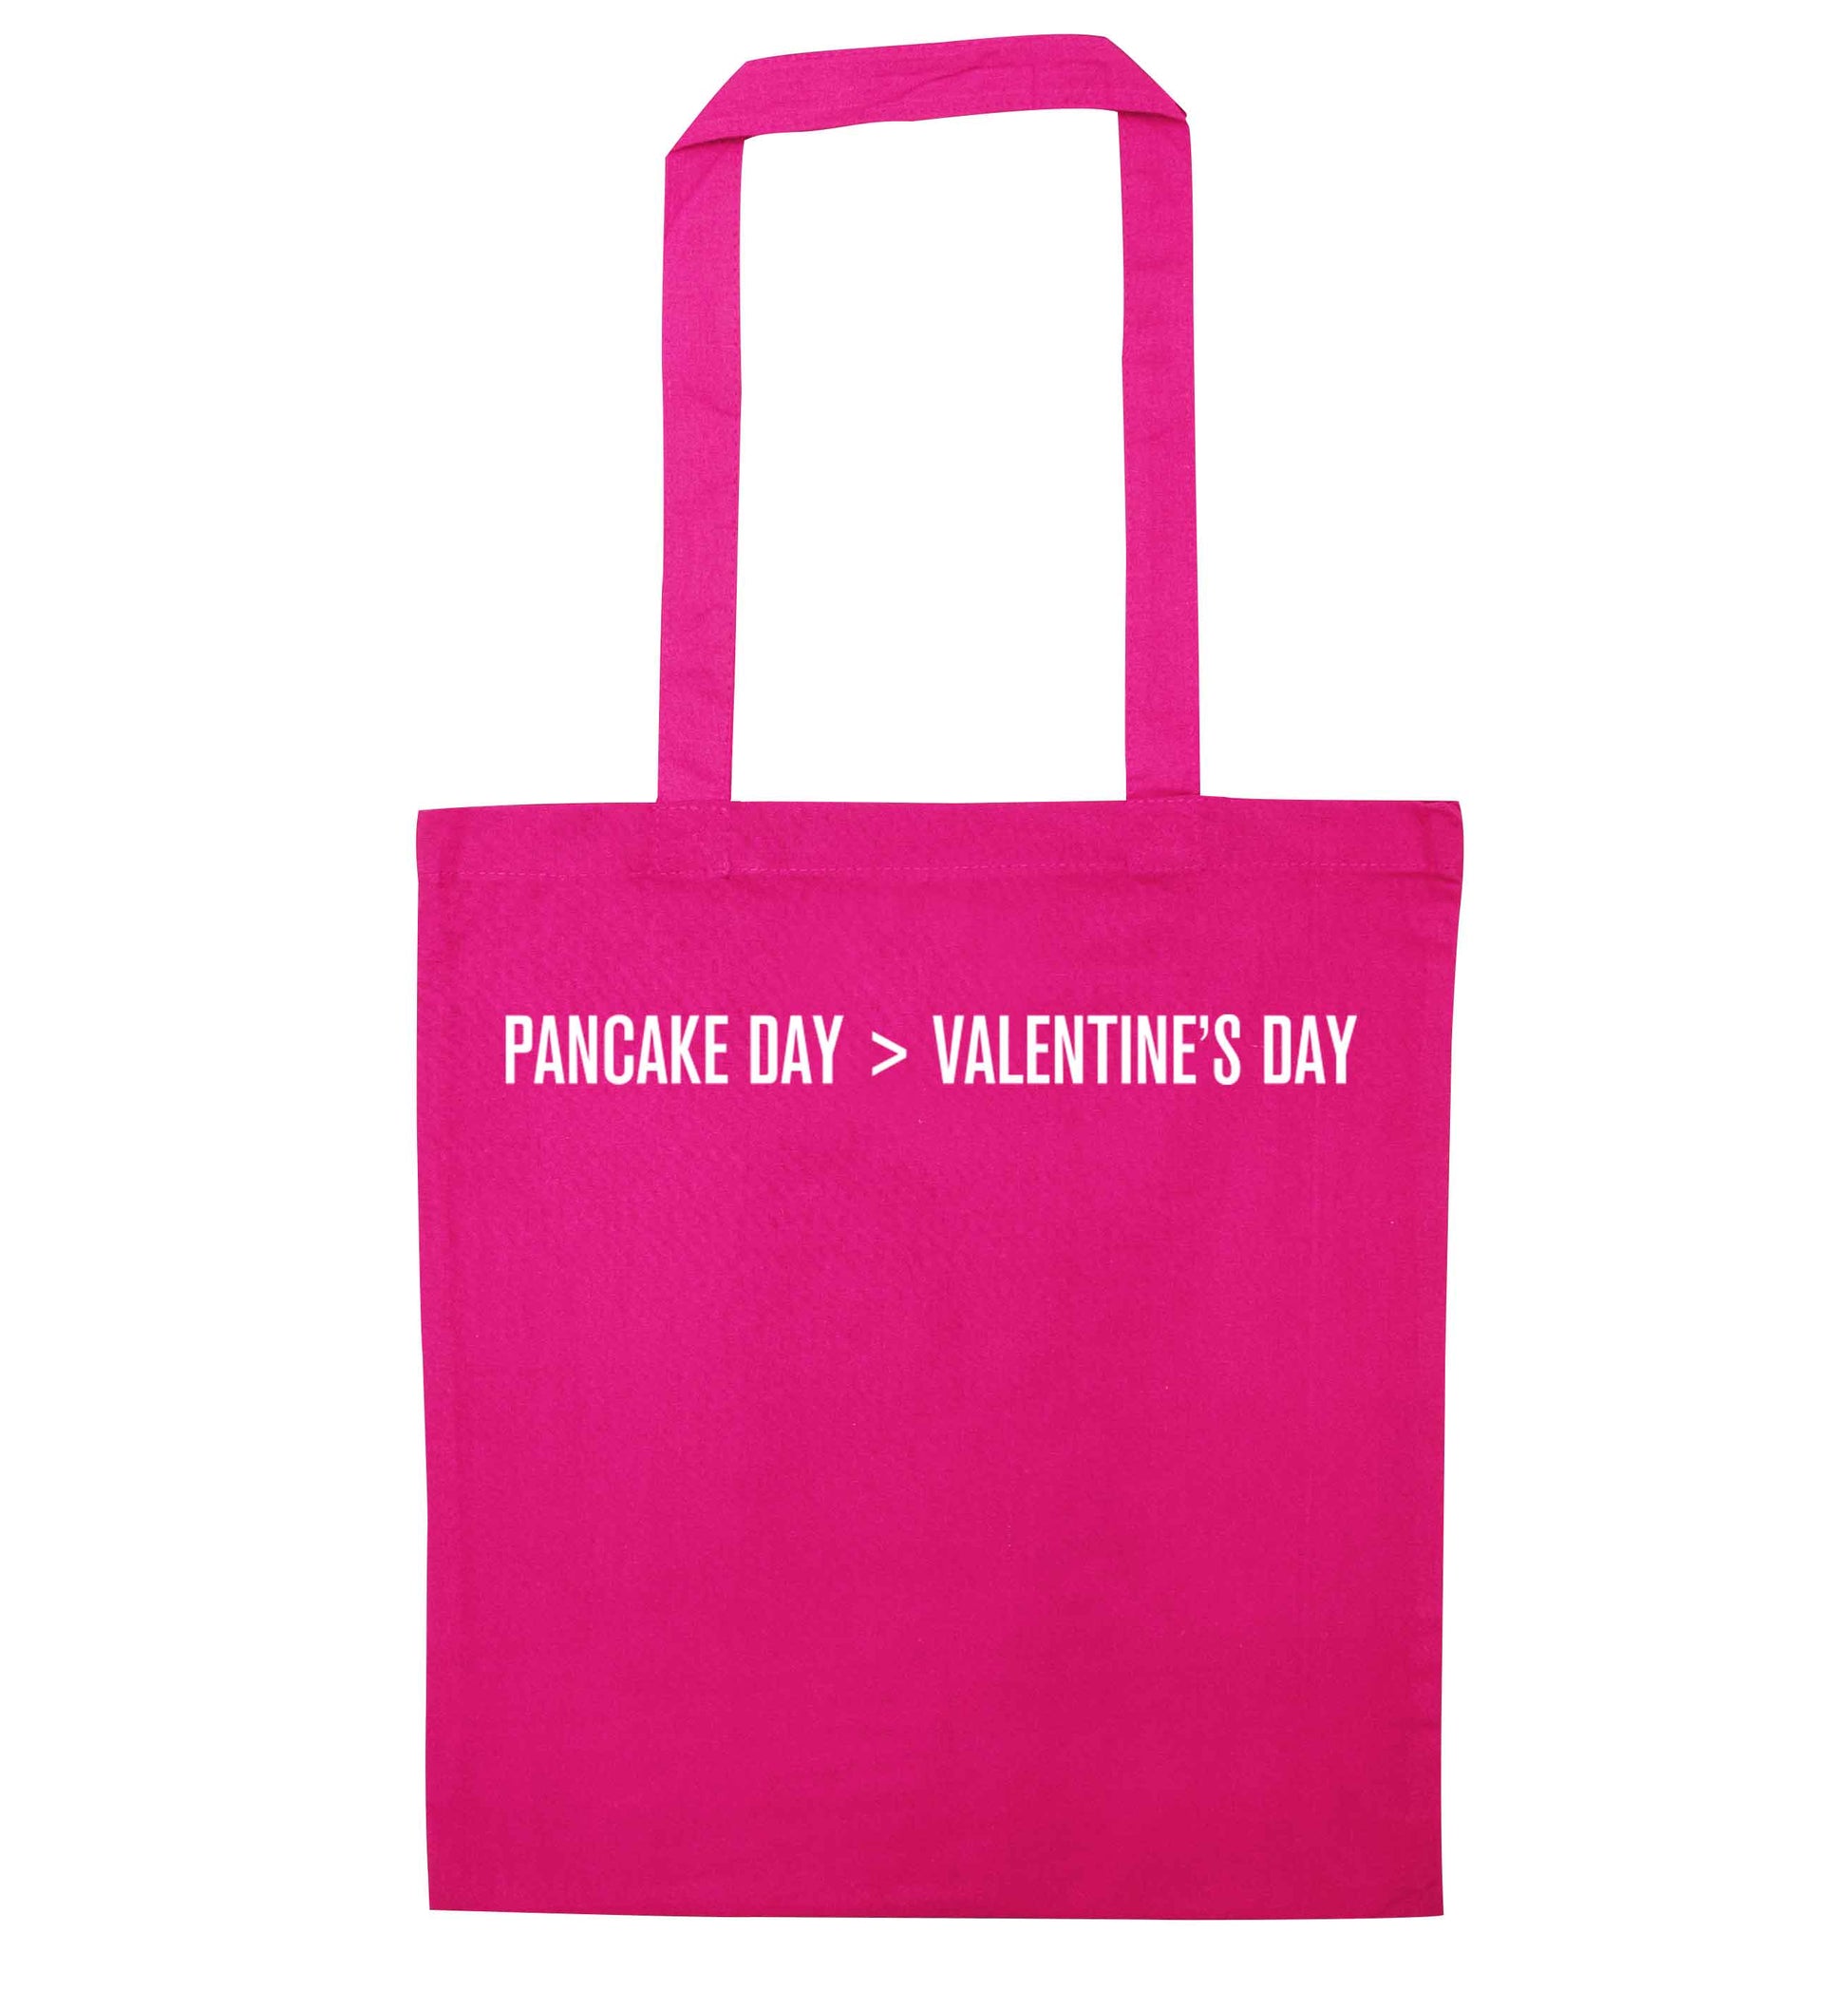 Pancake day > valentines day pink tote bag